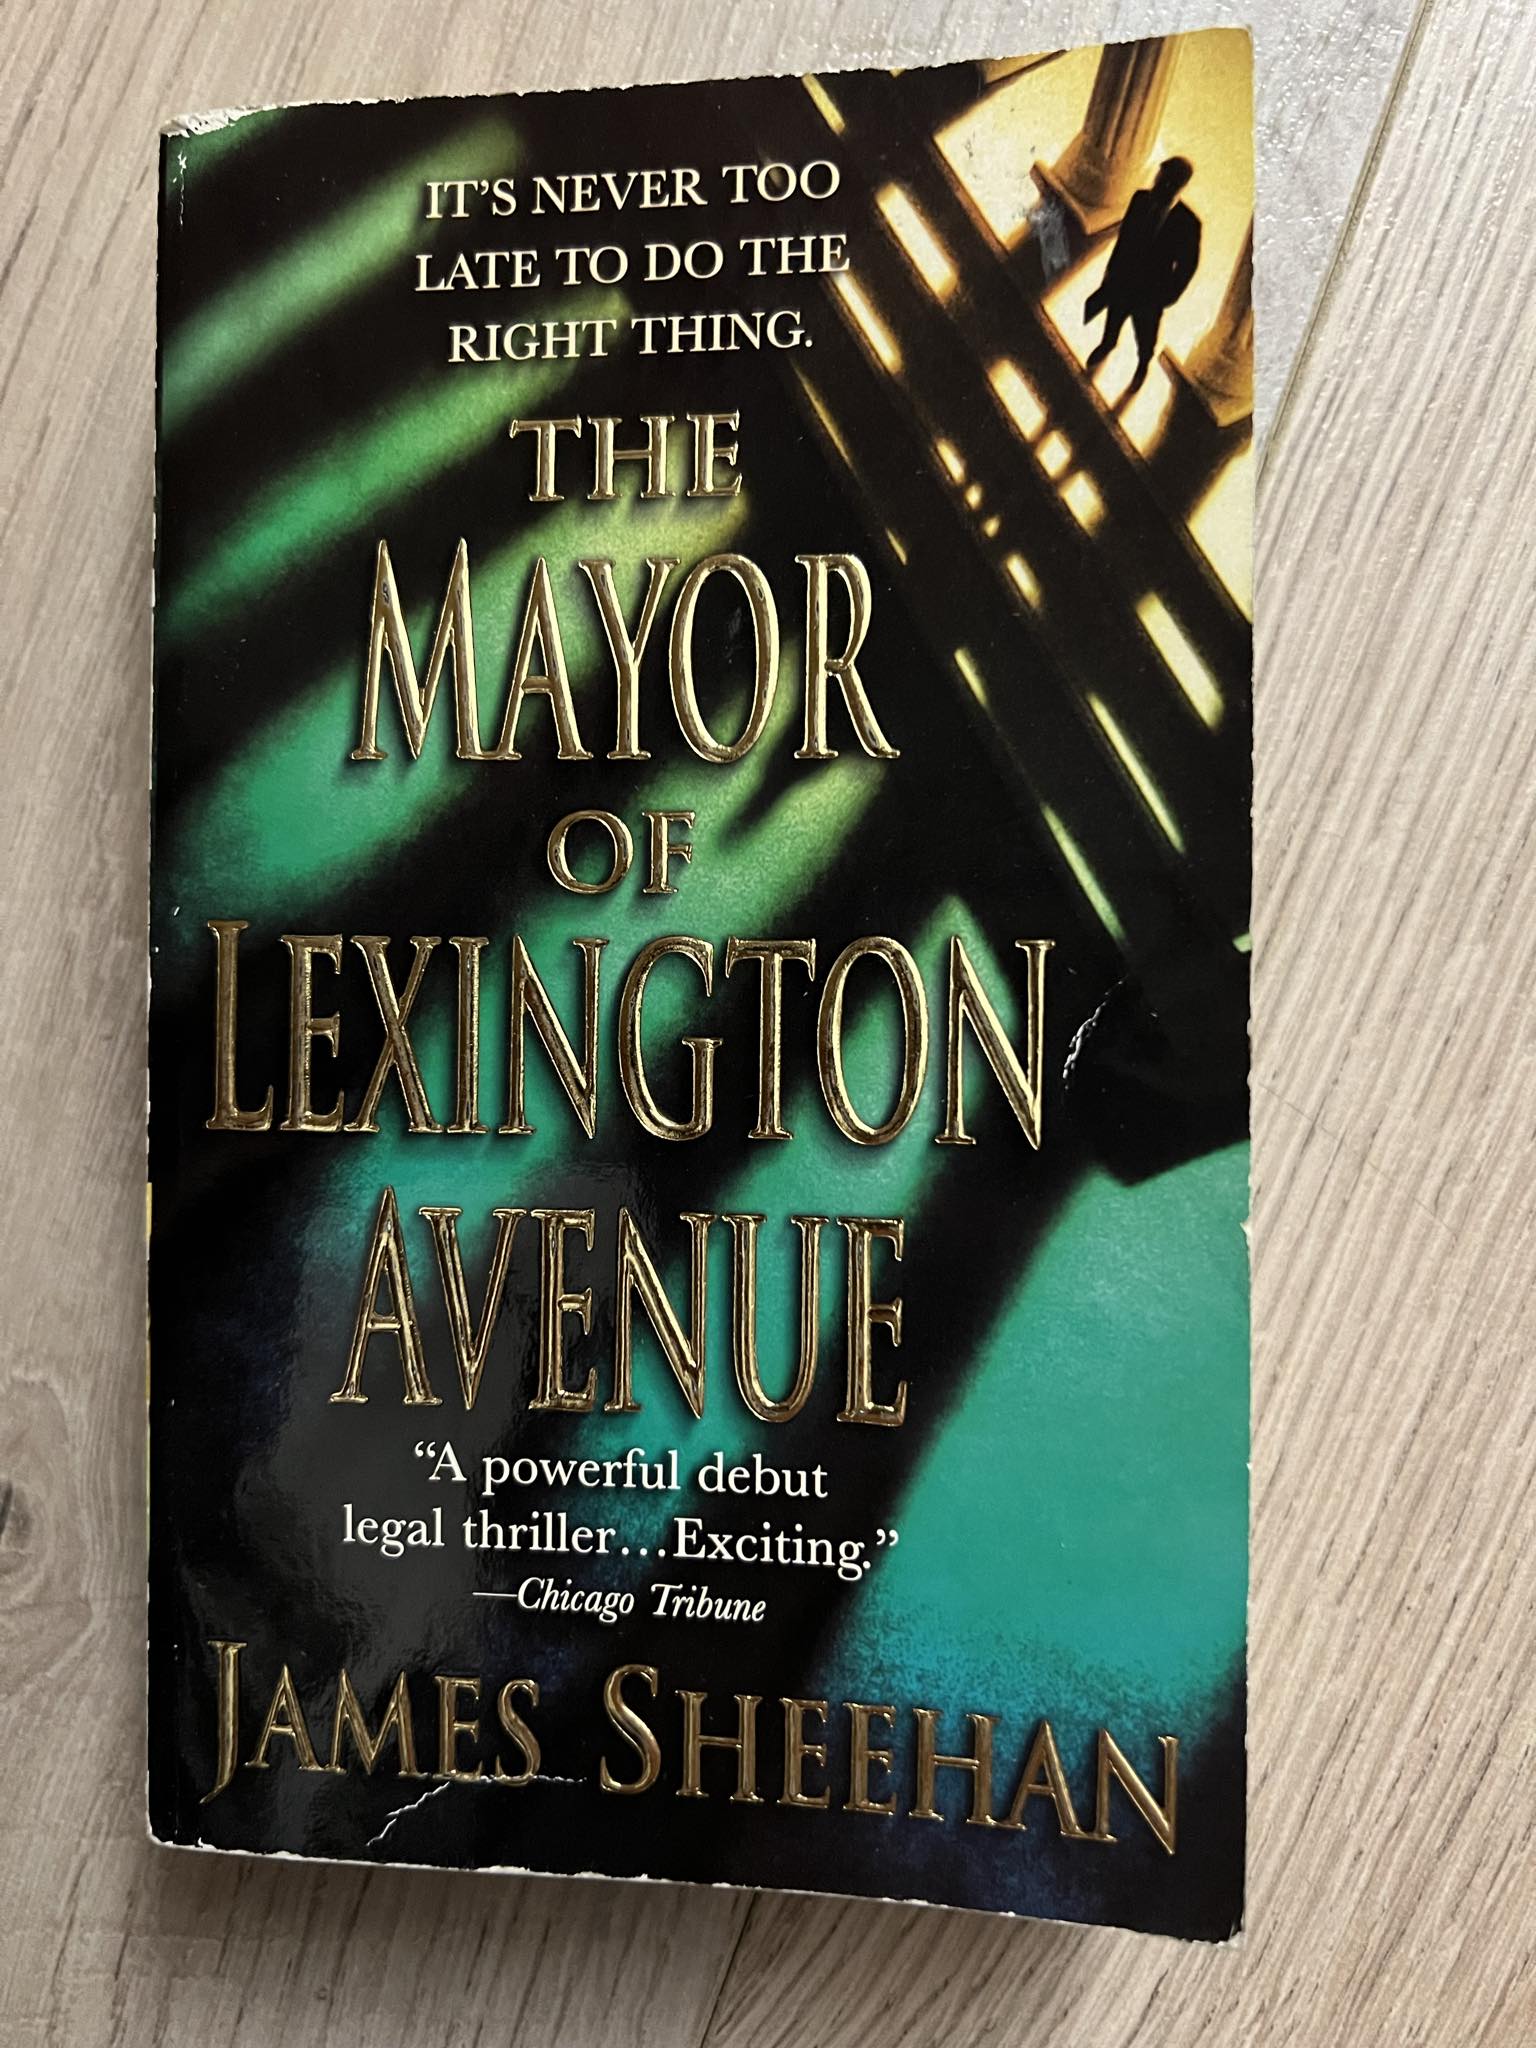 The Mayor of Lexington Avenue